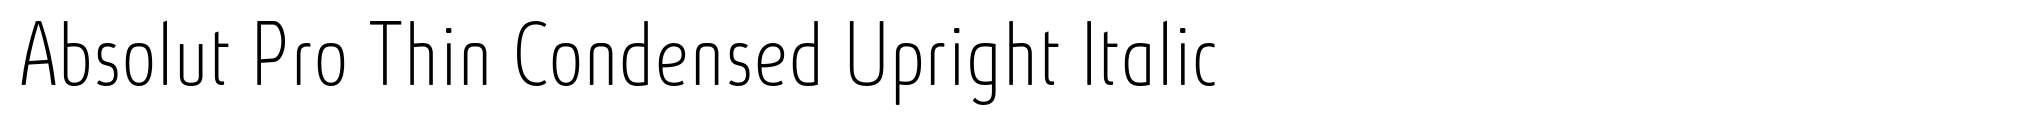 Absolut Pro Thin Condensed Upright Italic image